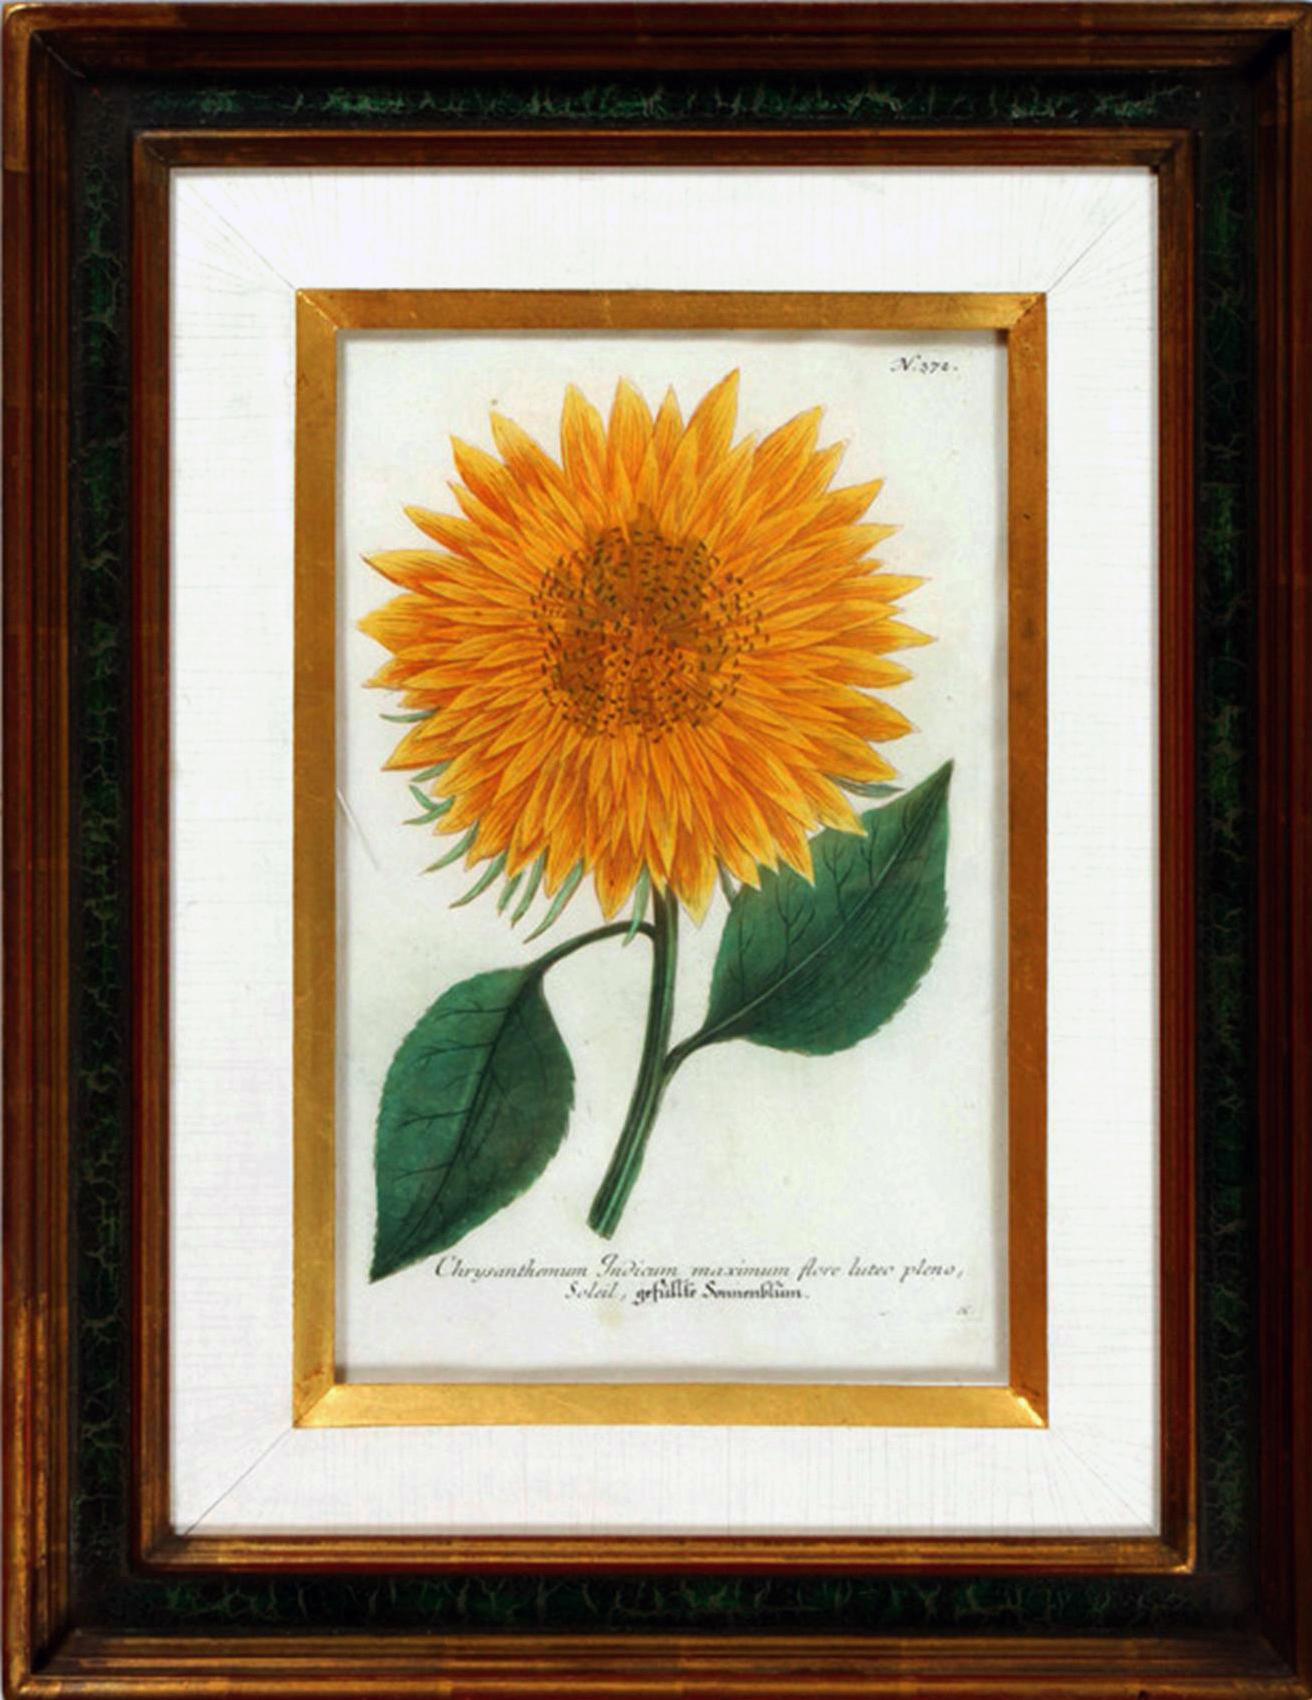 German Engraving of Sunflowers by Johann Weinmann